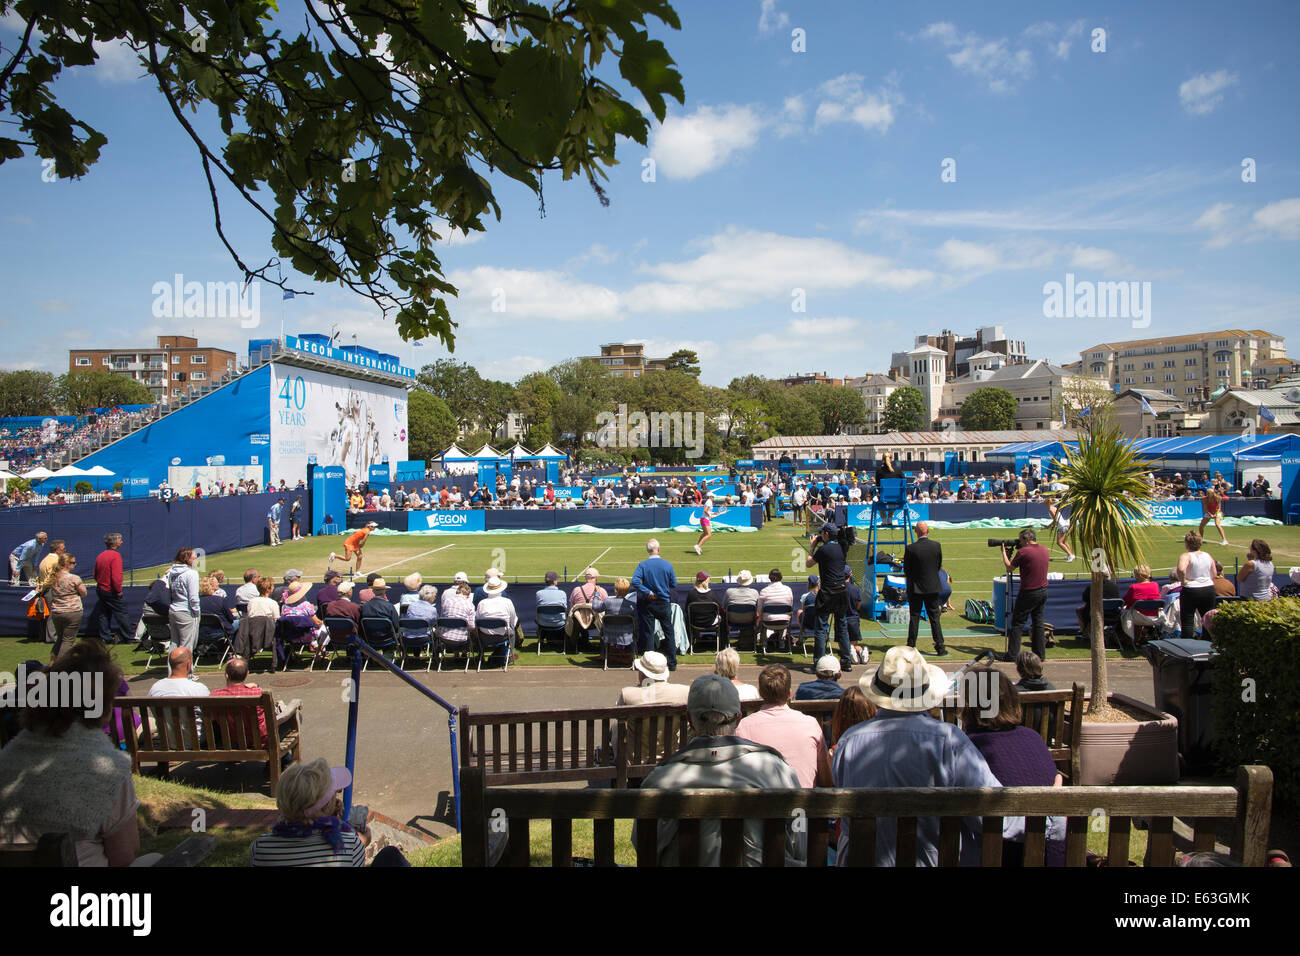 Aegon International Tennis campionati, Devonshire Park, a Eastbourne, East Sussex, England, Regno Unito Foto Stock